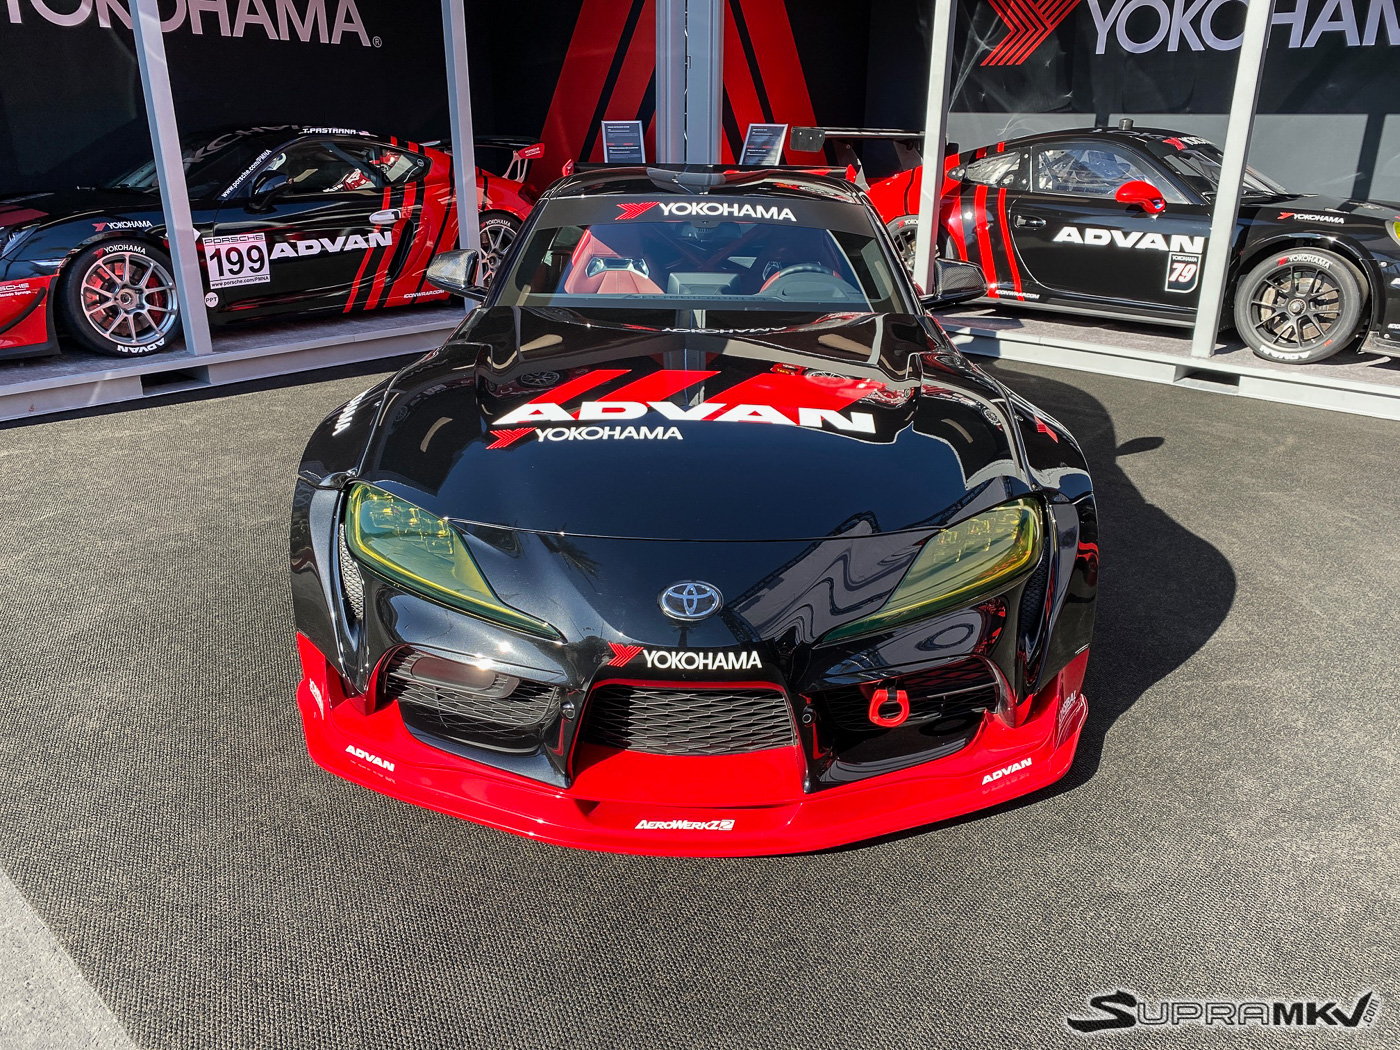 Yomohama-Advan-Toyota-Supra-MKV-Build-SEMA-2019-1.jpg